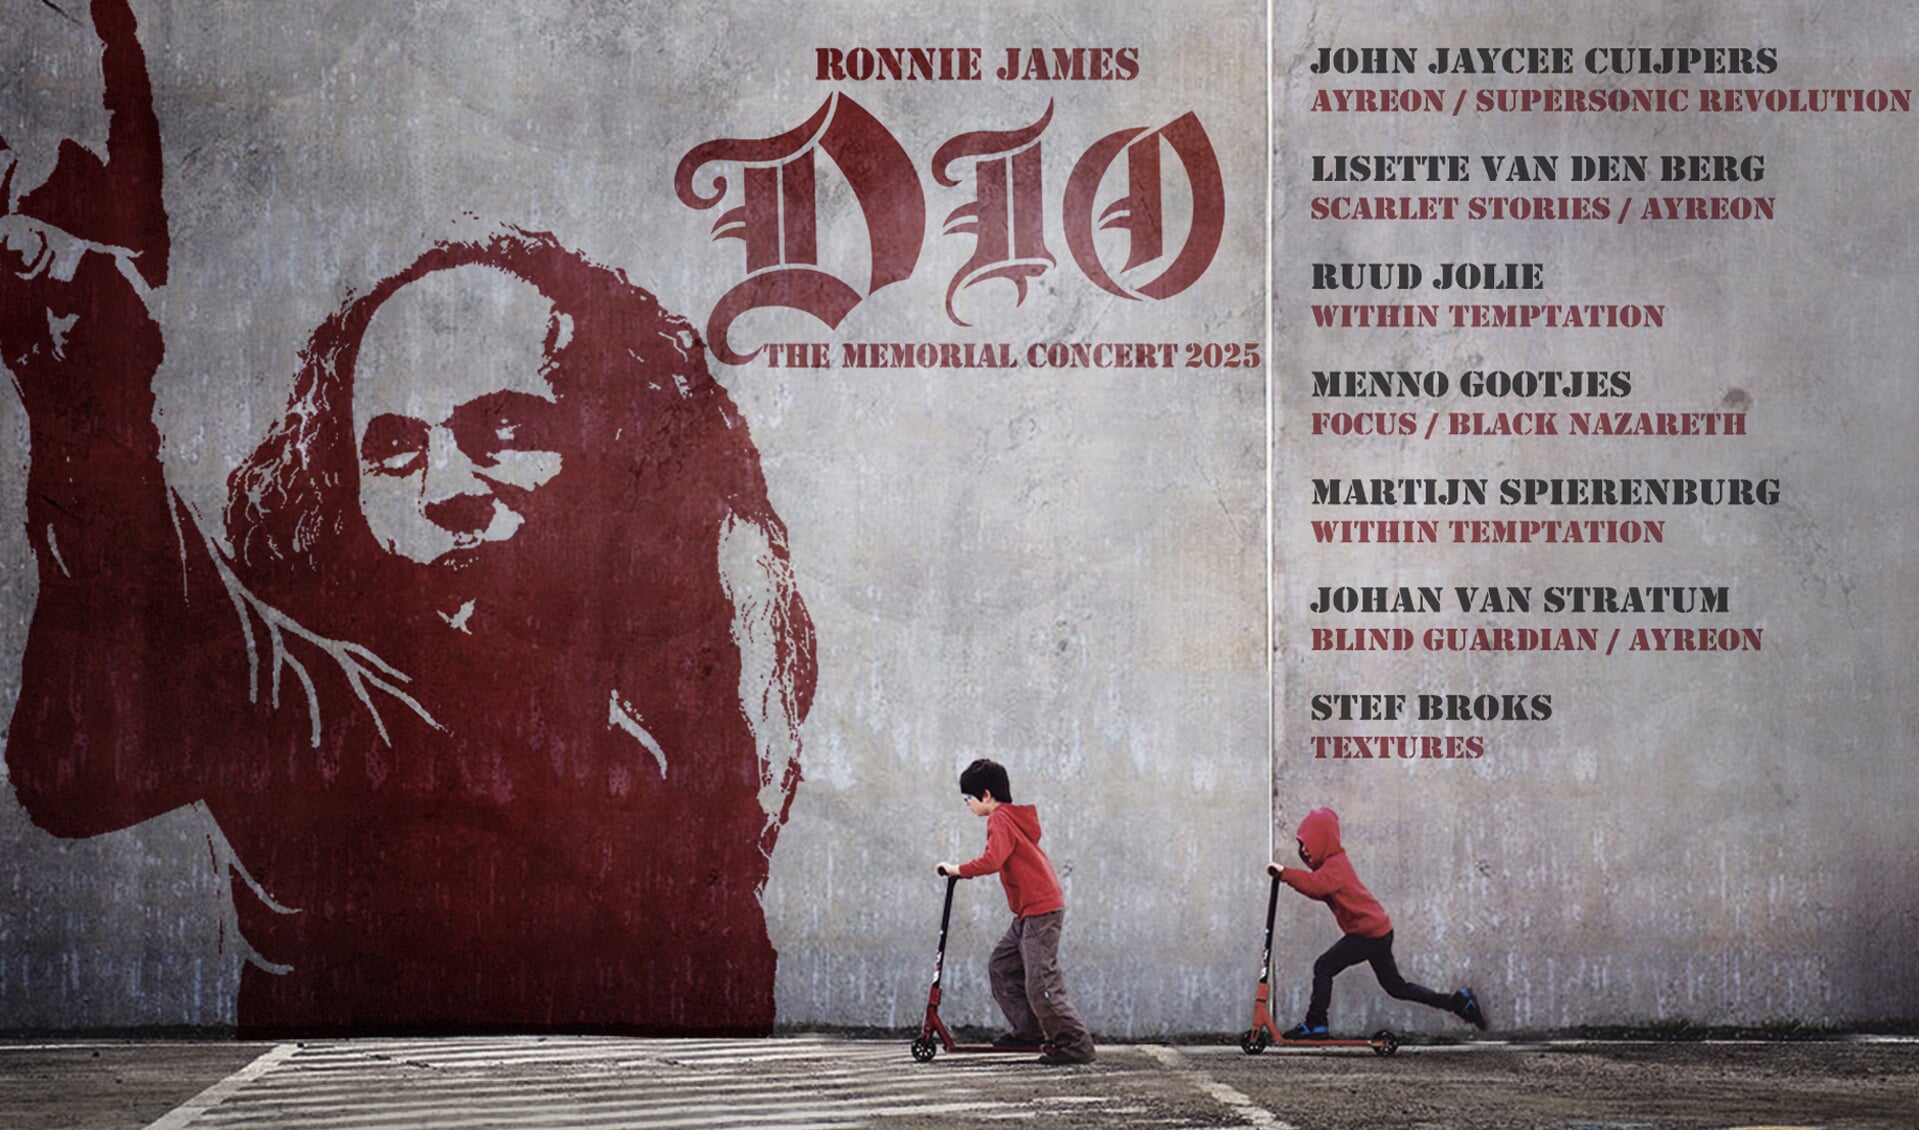 RJ Dio The Memorial Concert 2025